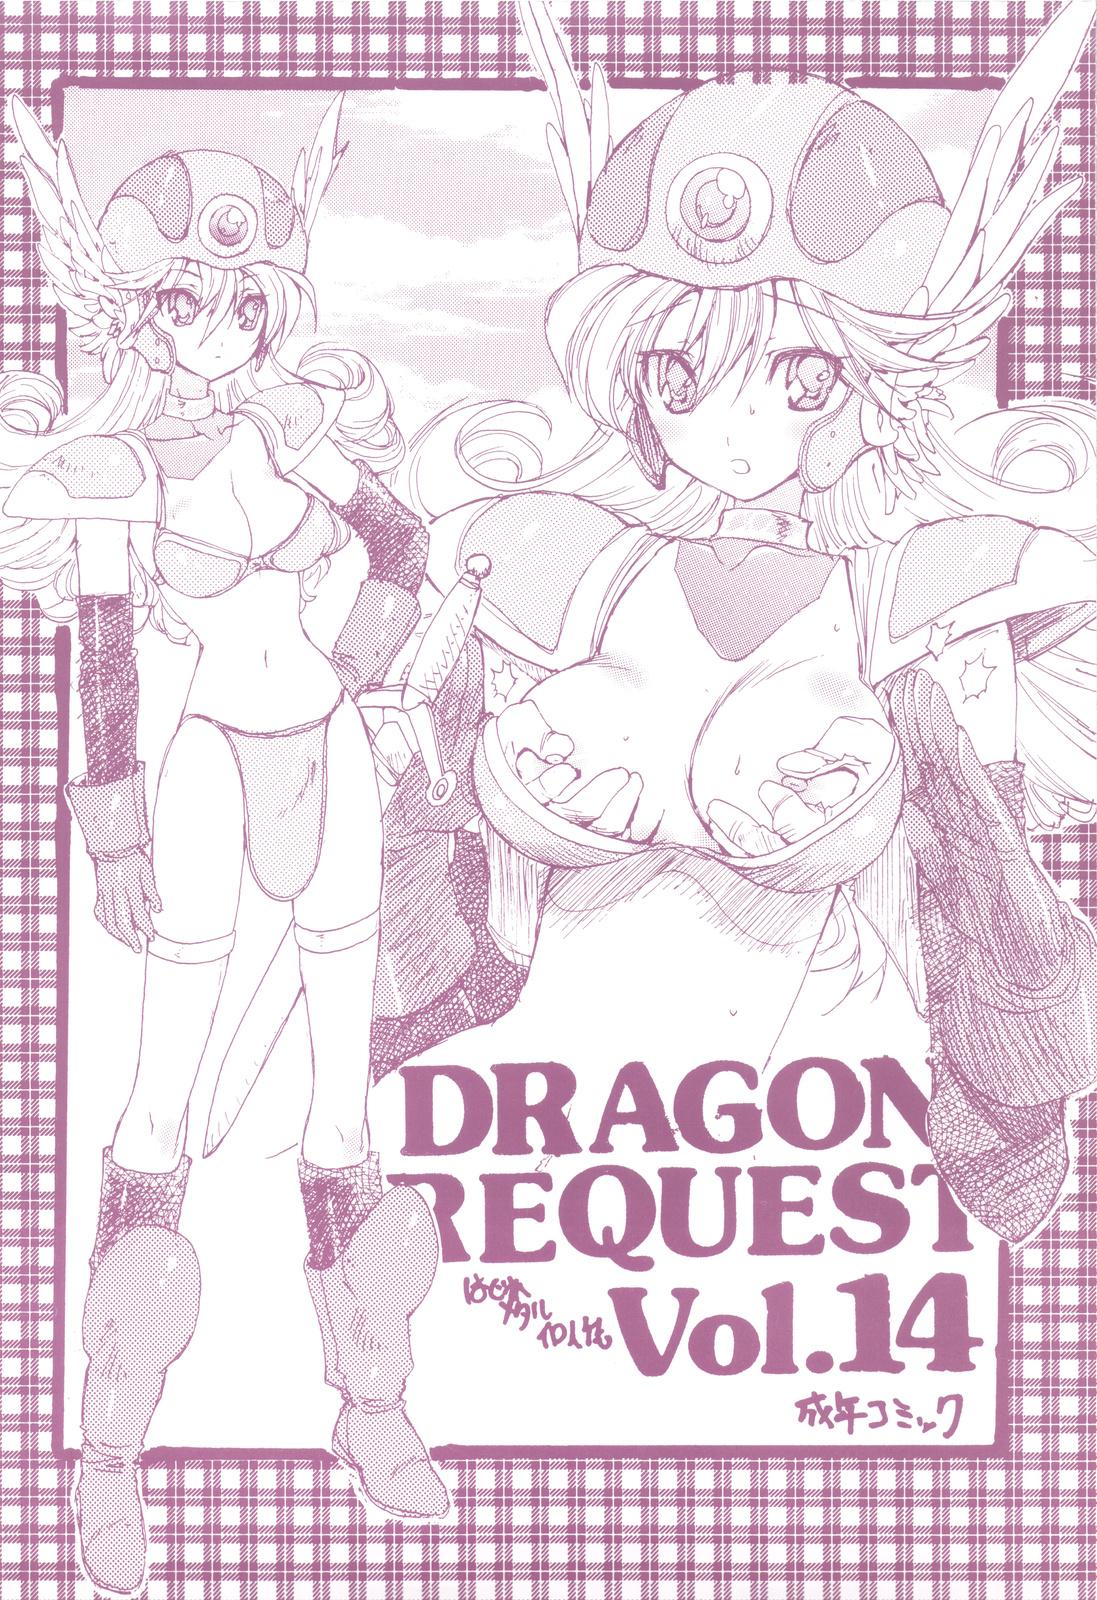 DRAGON REQUEST Vol.14 0